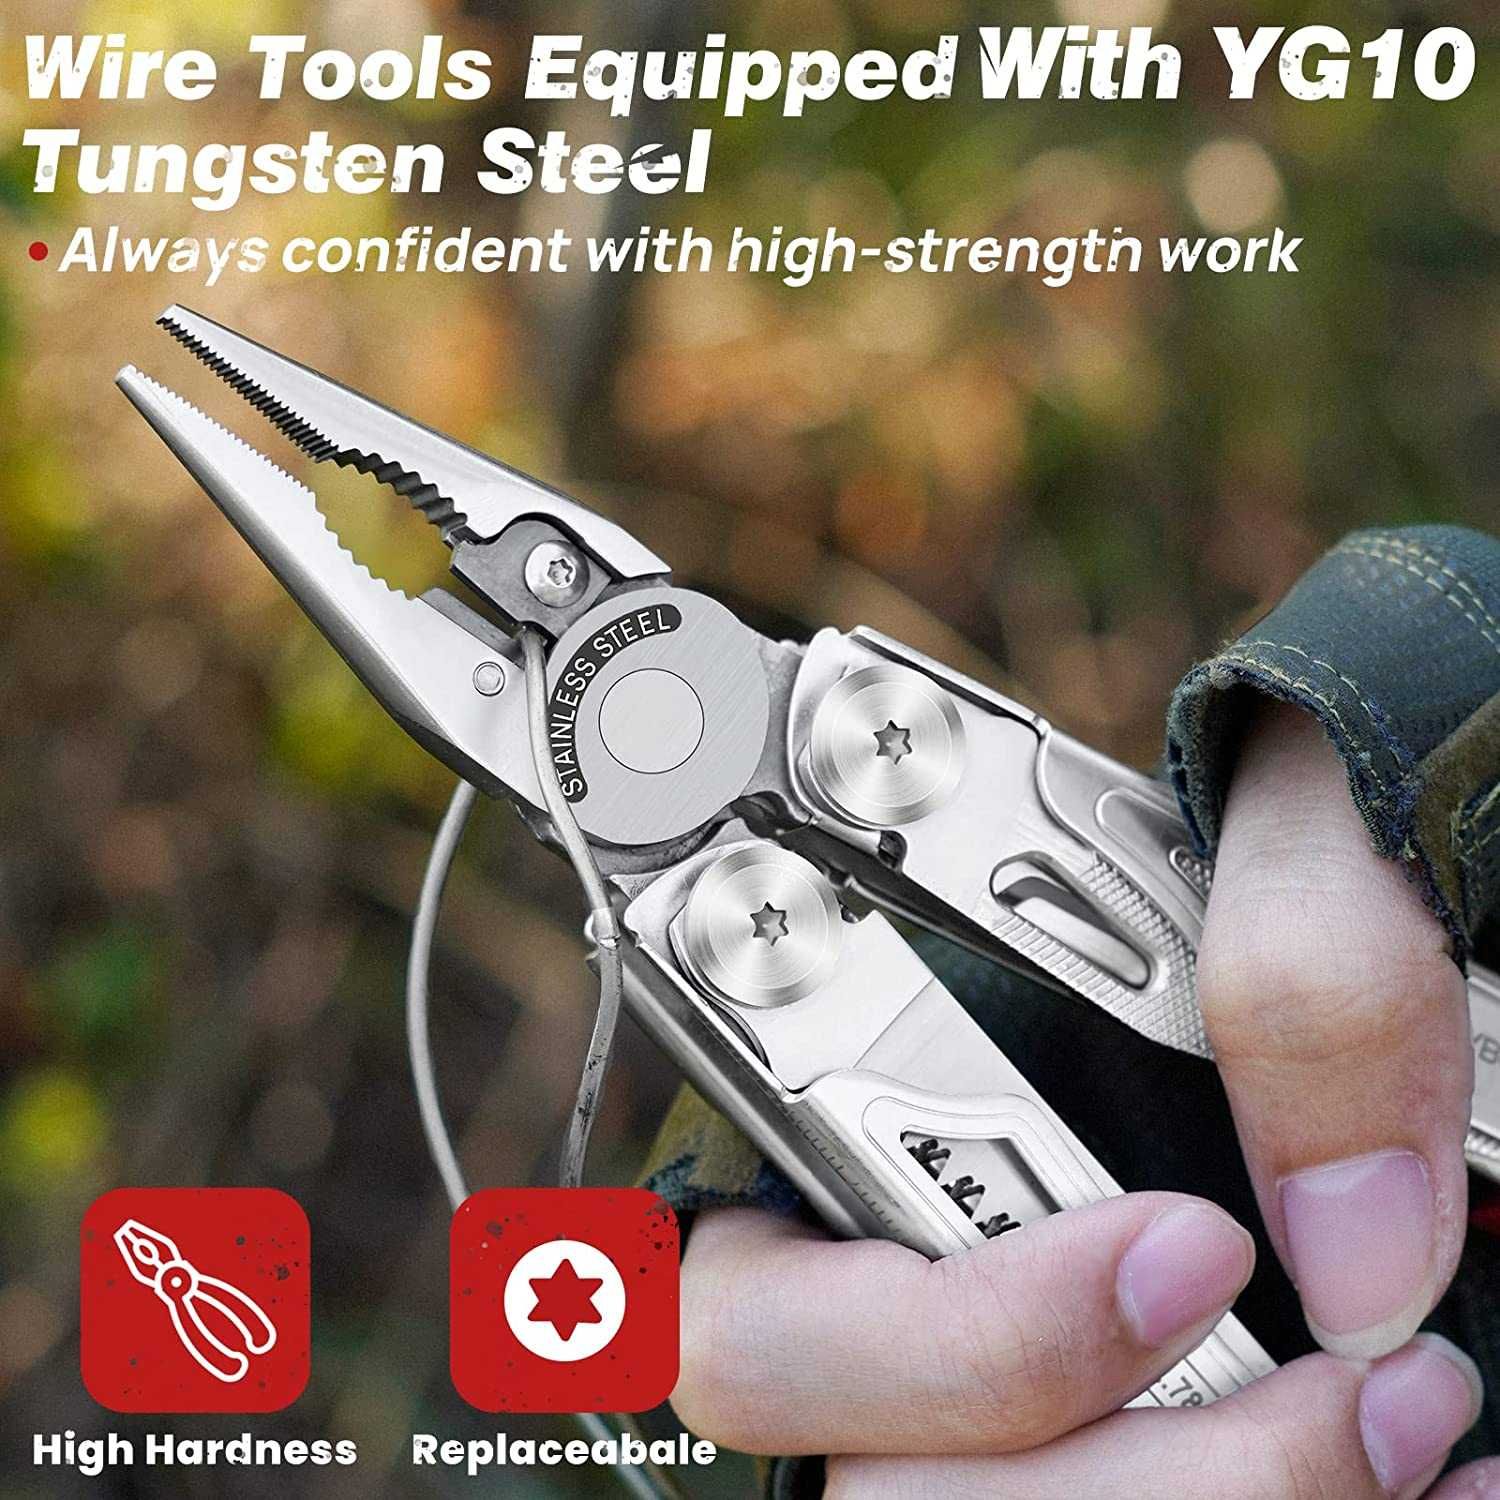 Bibury Multi-Tool 22 в 1 мултитул-сребрист цвят,джобно ножче